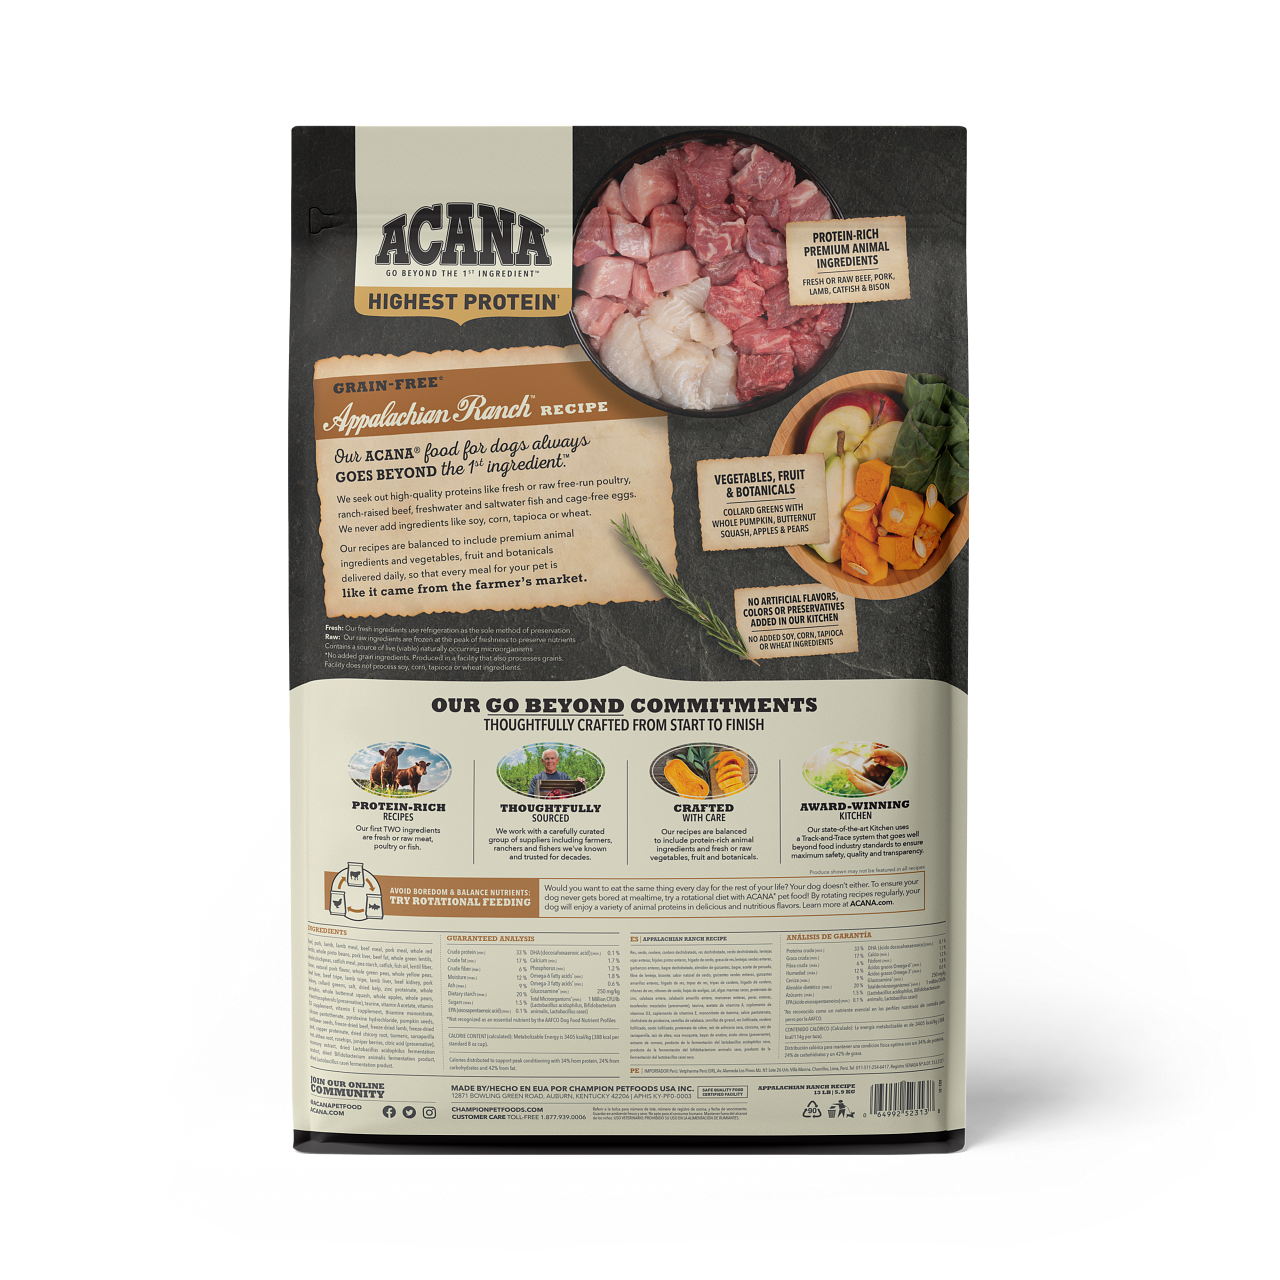 Acana Dry Dog Food Highest Protein Appalachian Ranch